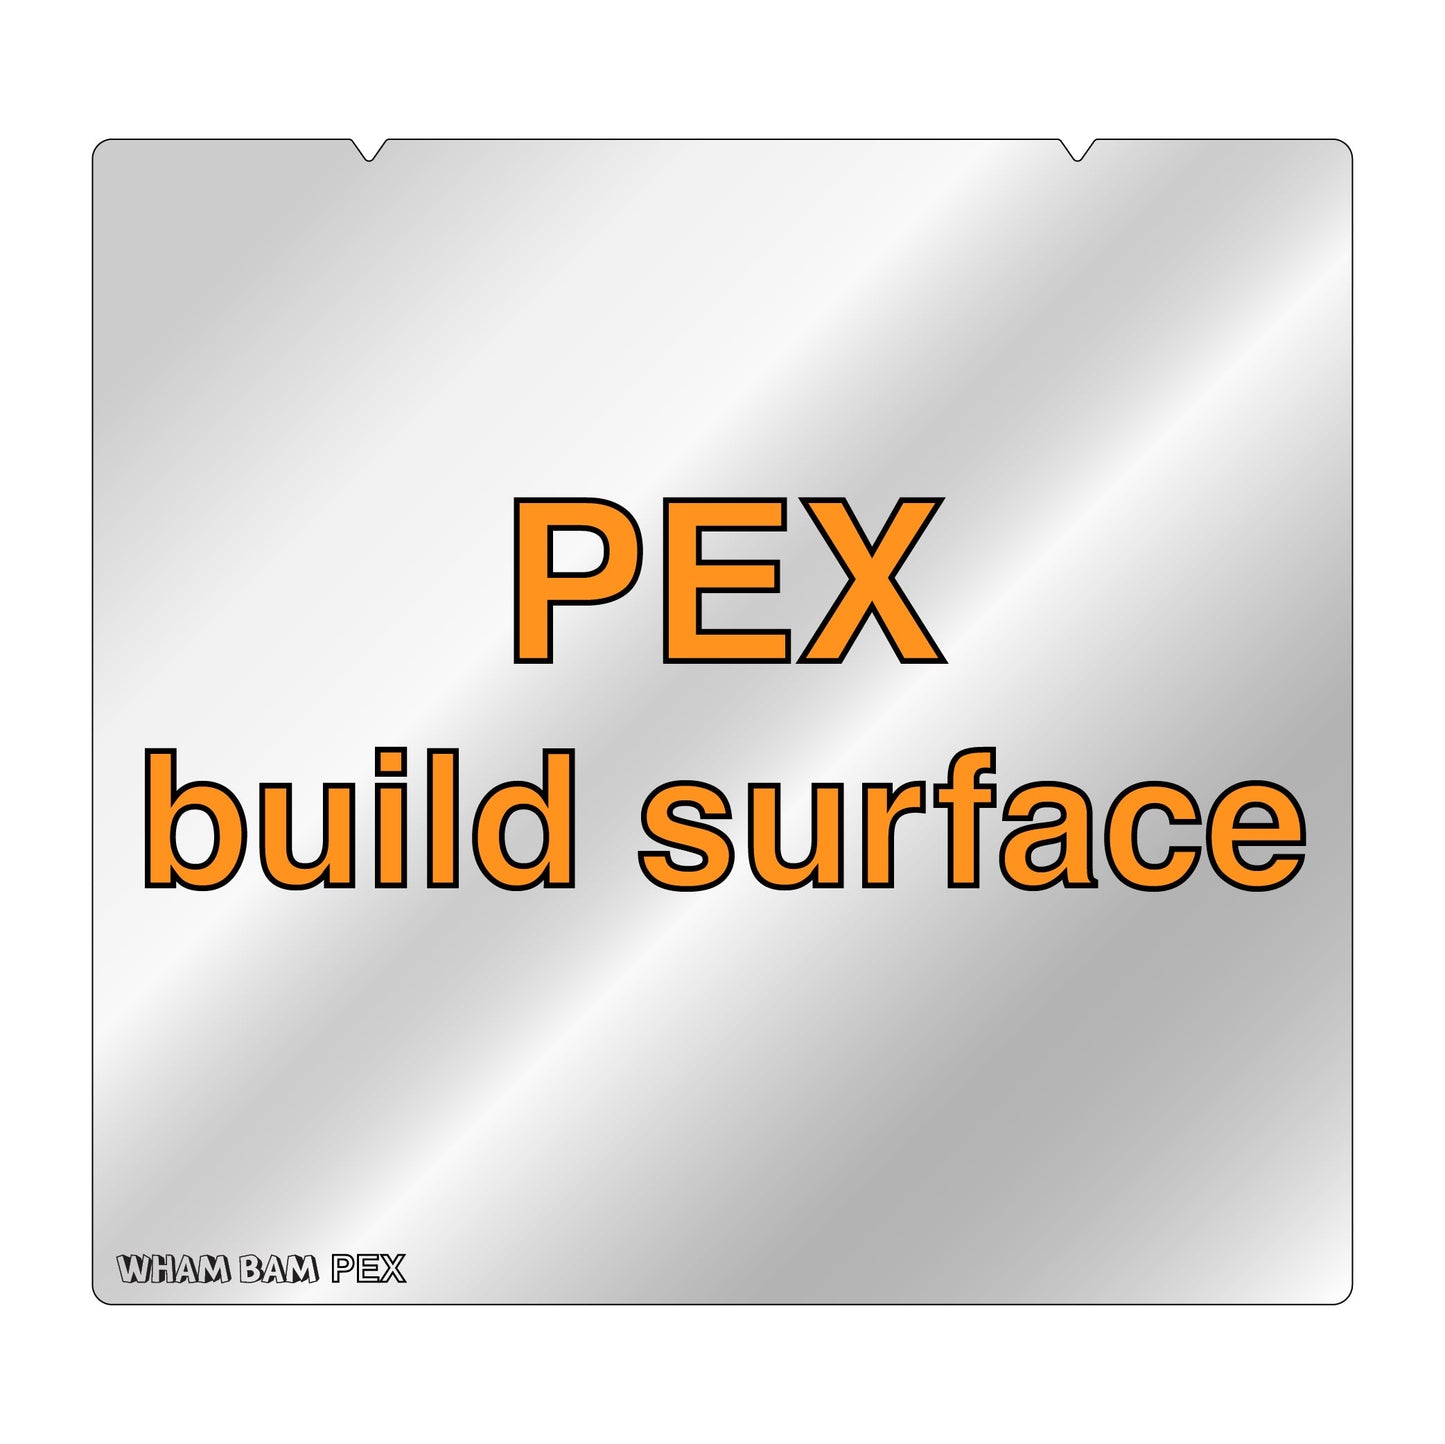 PEX Build Surface - 254 x 235 - Prusa i3 MK3/S/+, Raise3D N1, MatterHackers Pulse